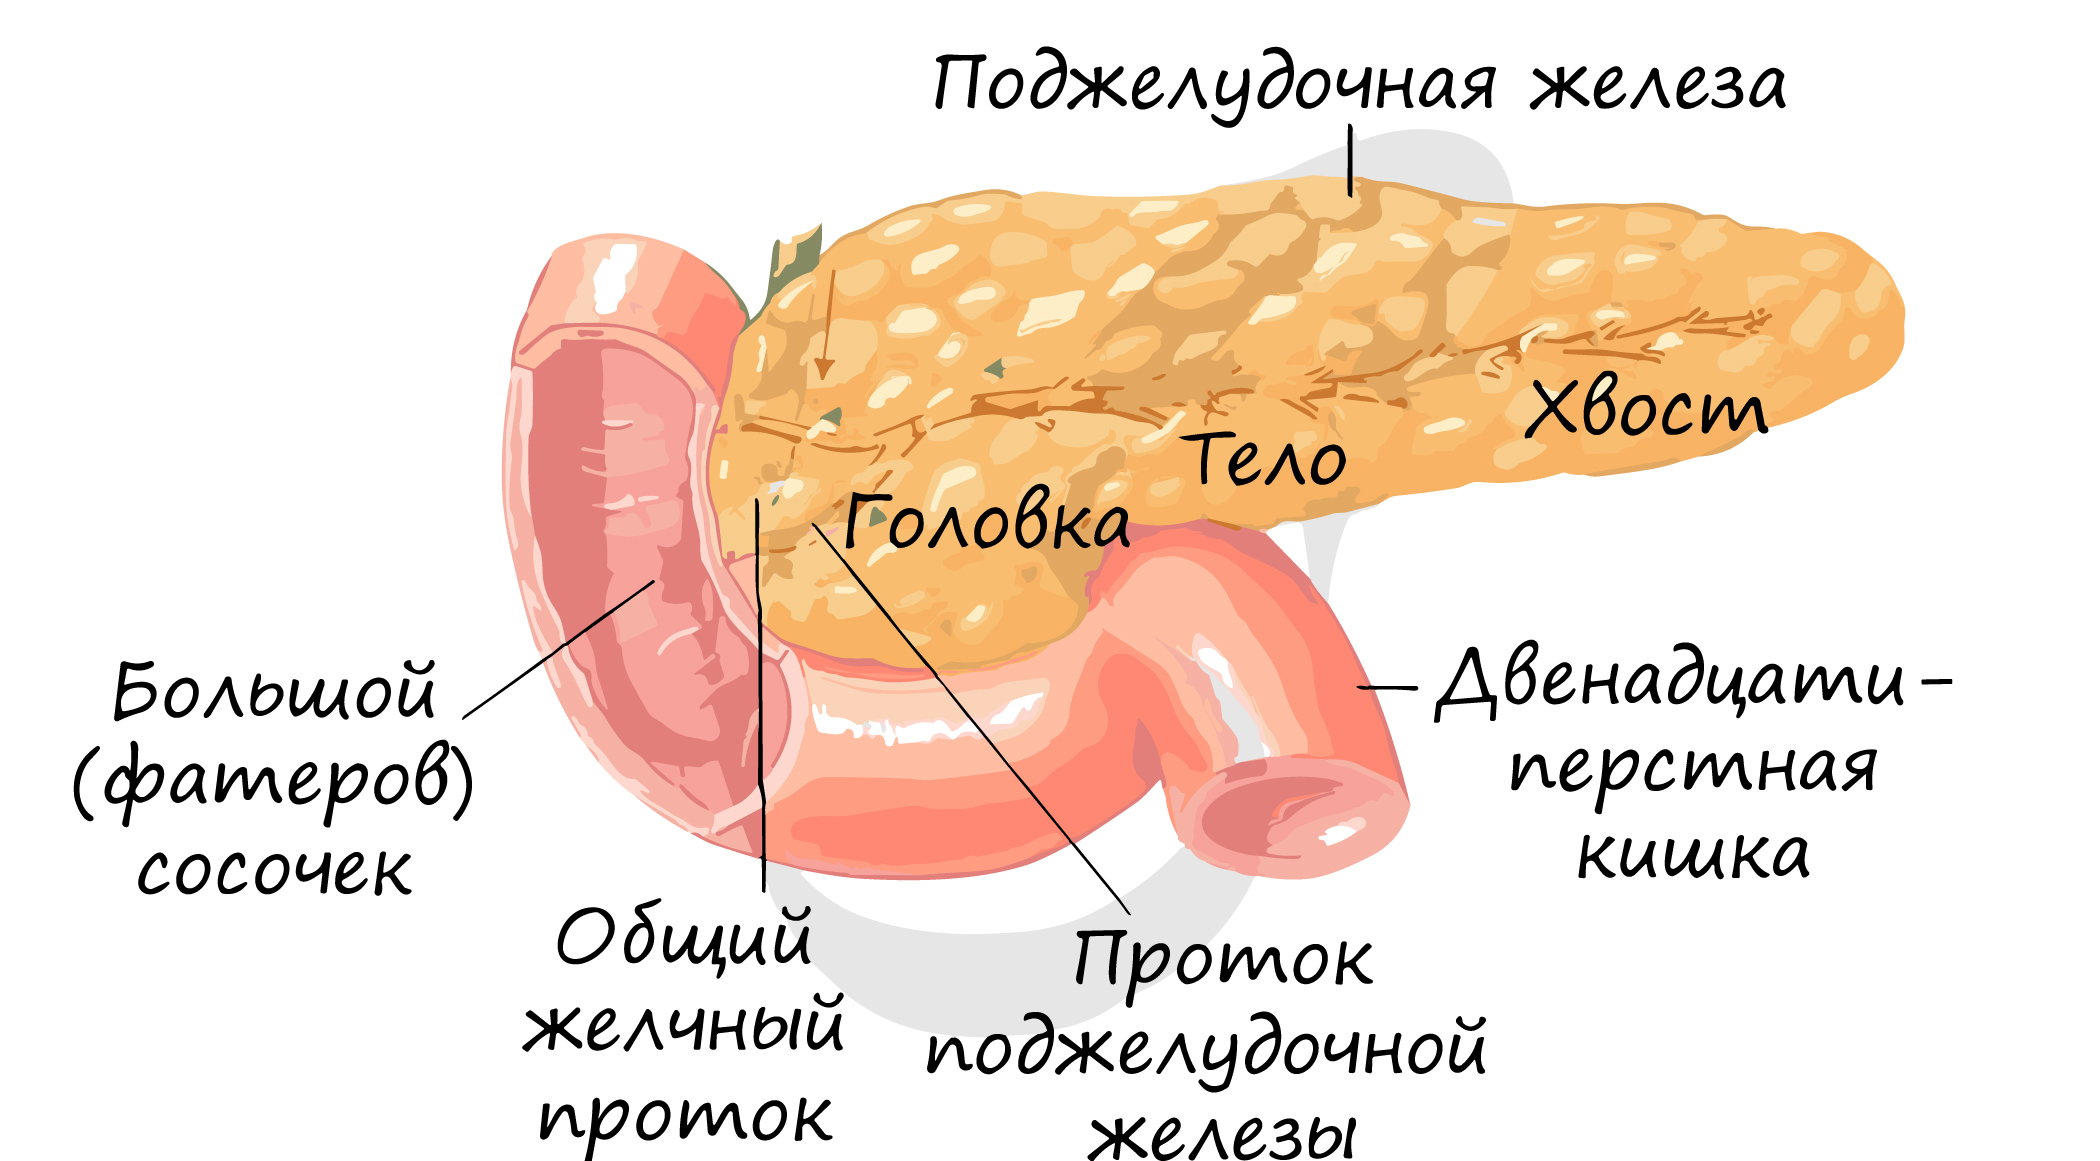 Протоки поджелудочной железы. Панкреатический проток поджелудочной железы. Главный проток поджелудочной железы.